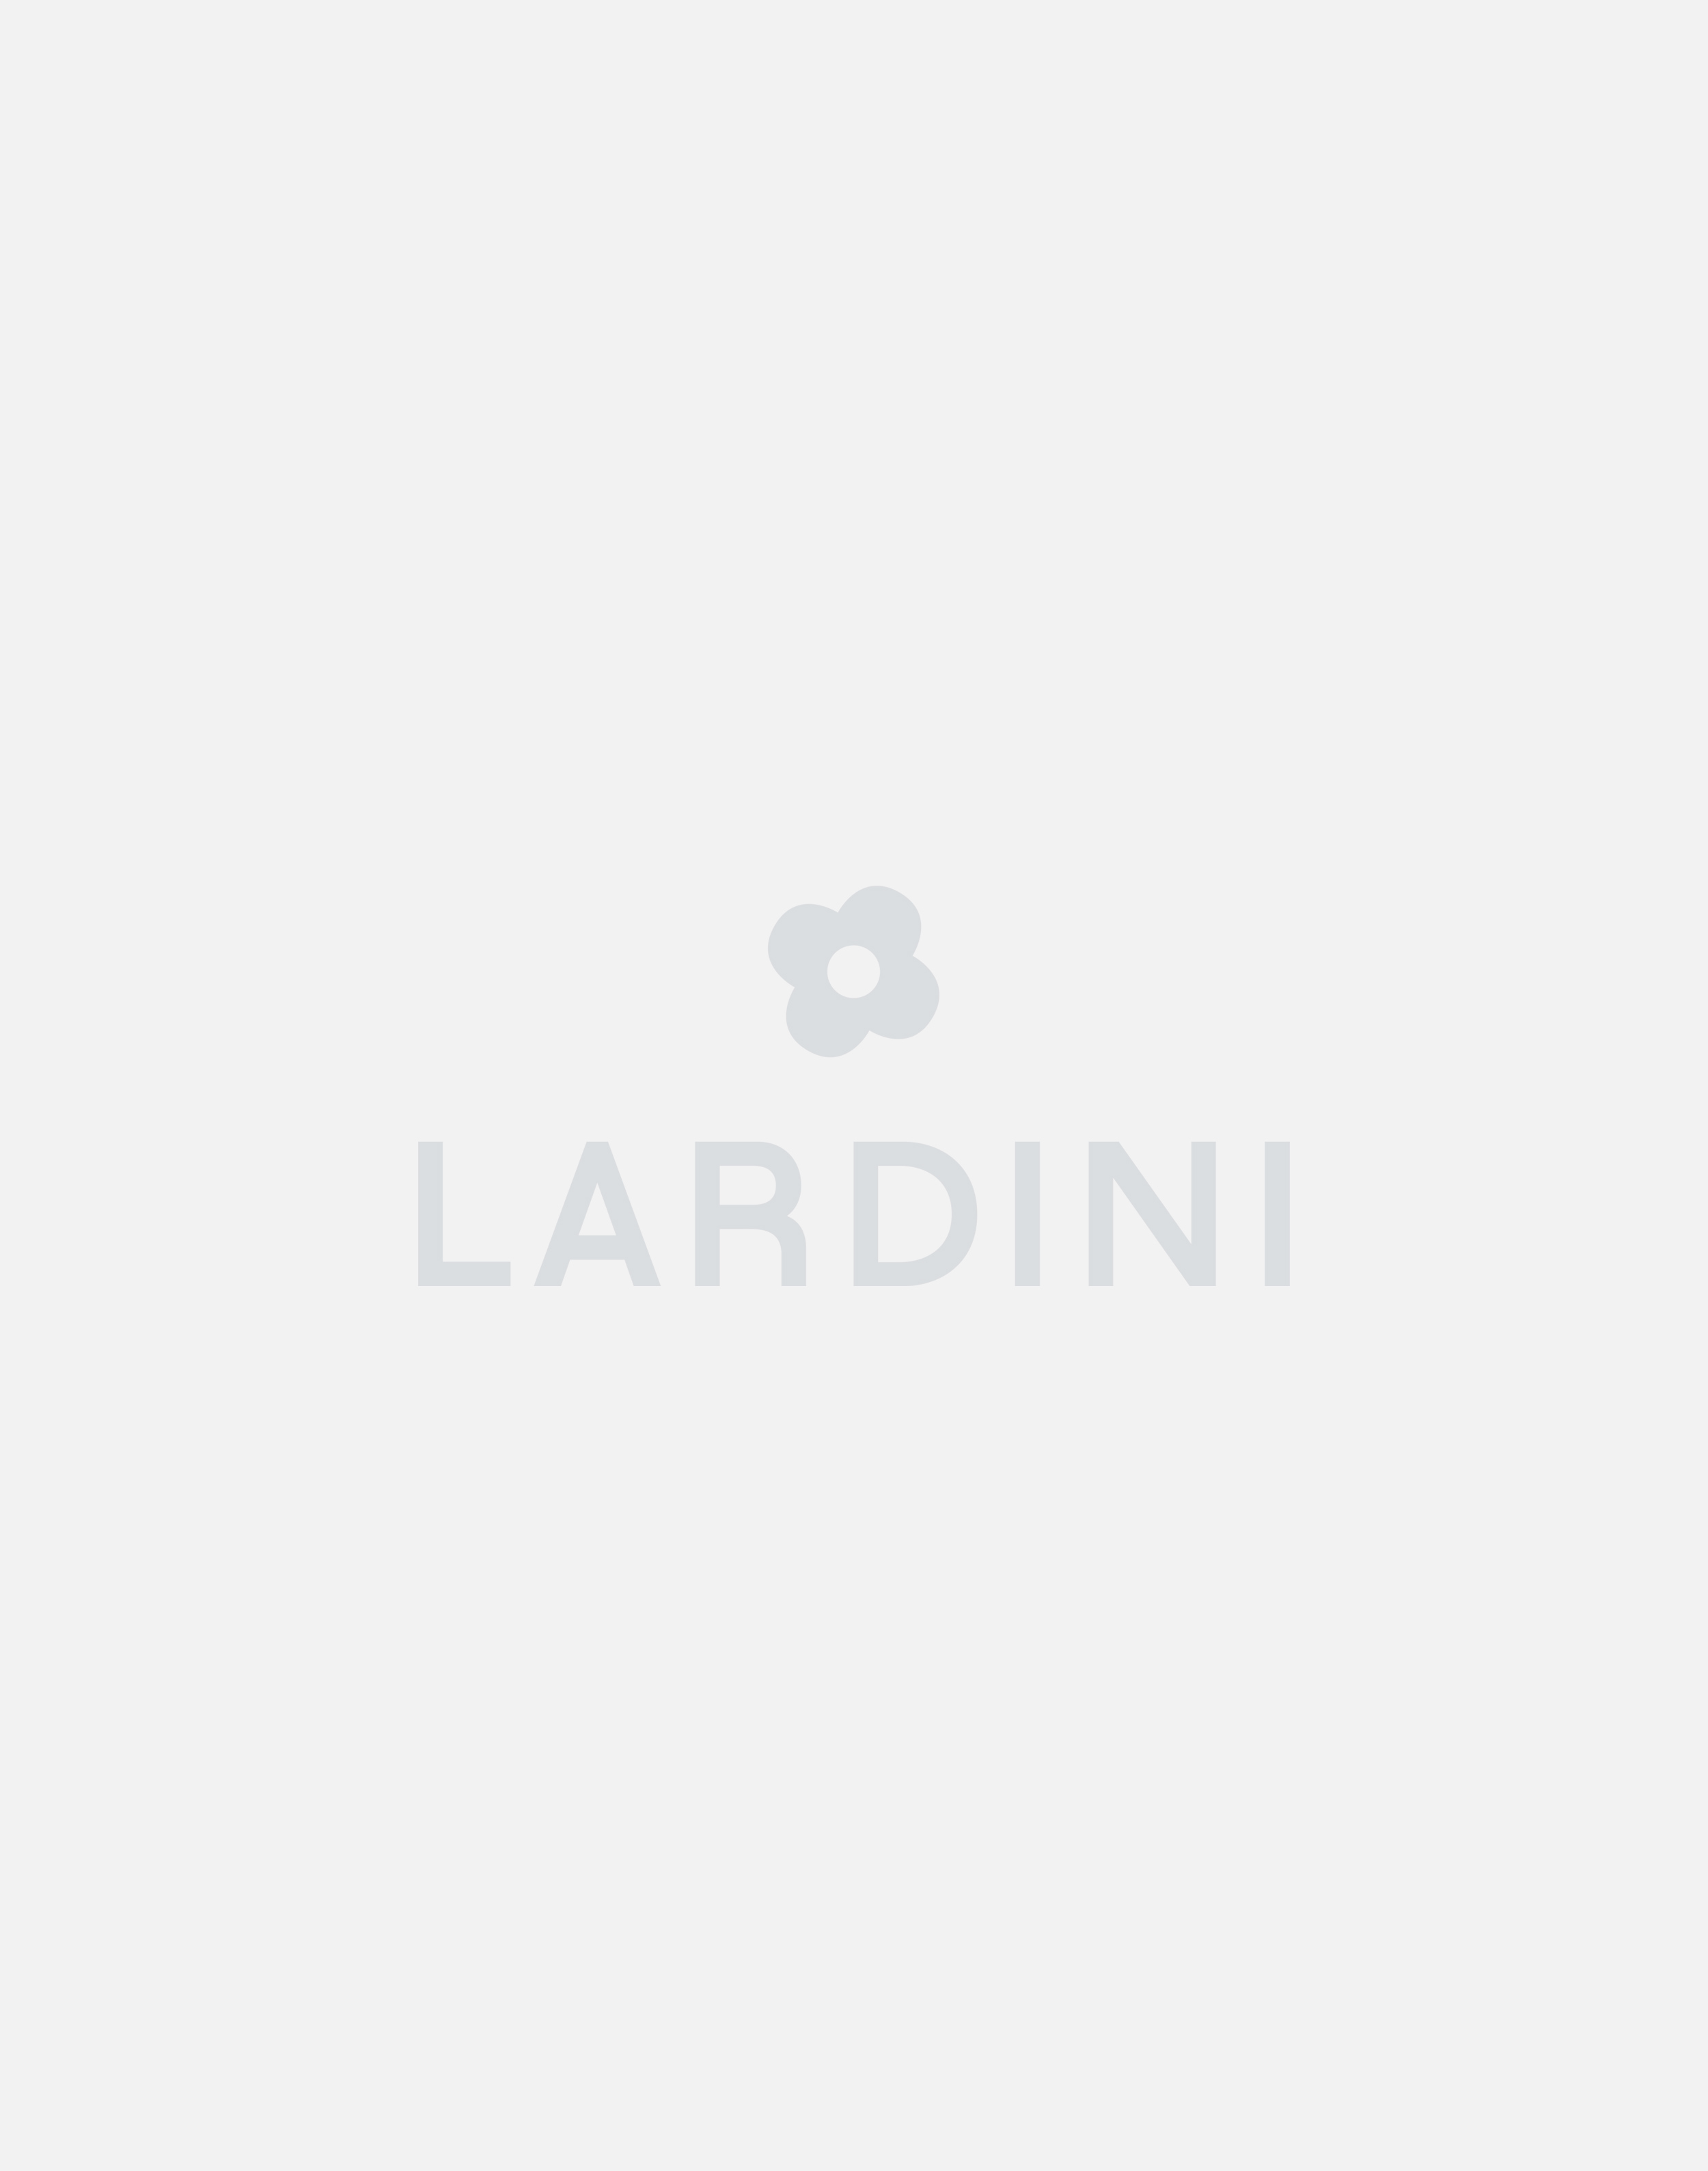 T-shirt with matching embroidery - Luigi Lardini capsule 3